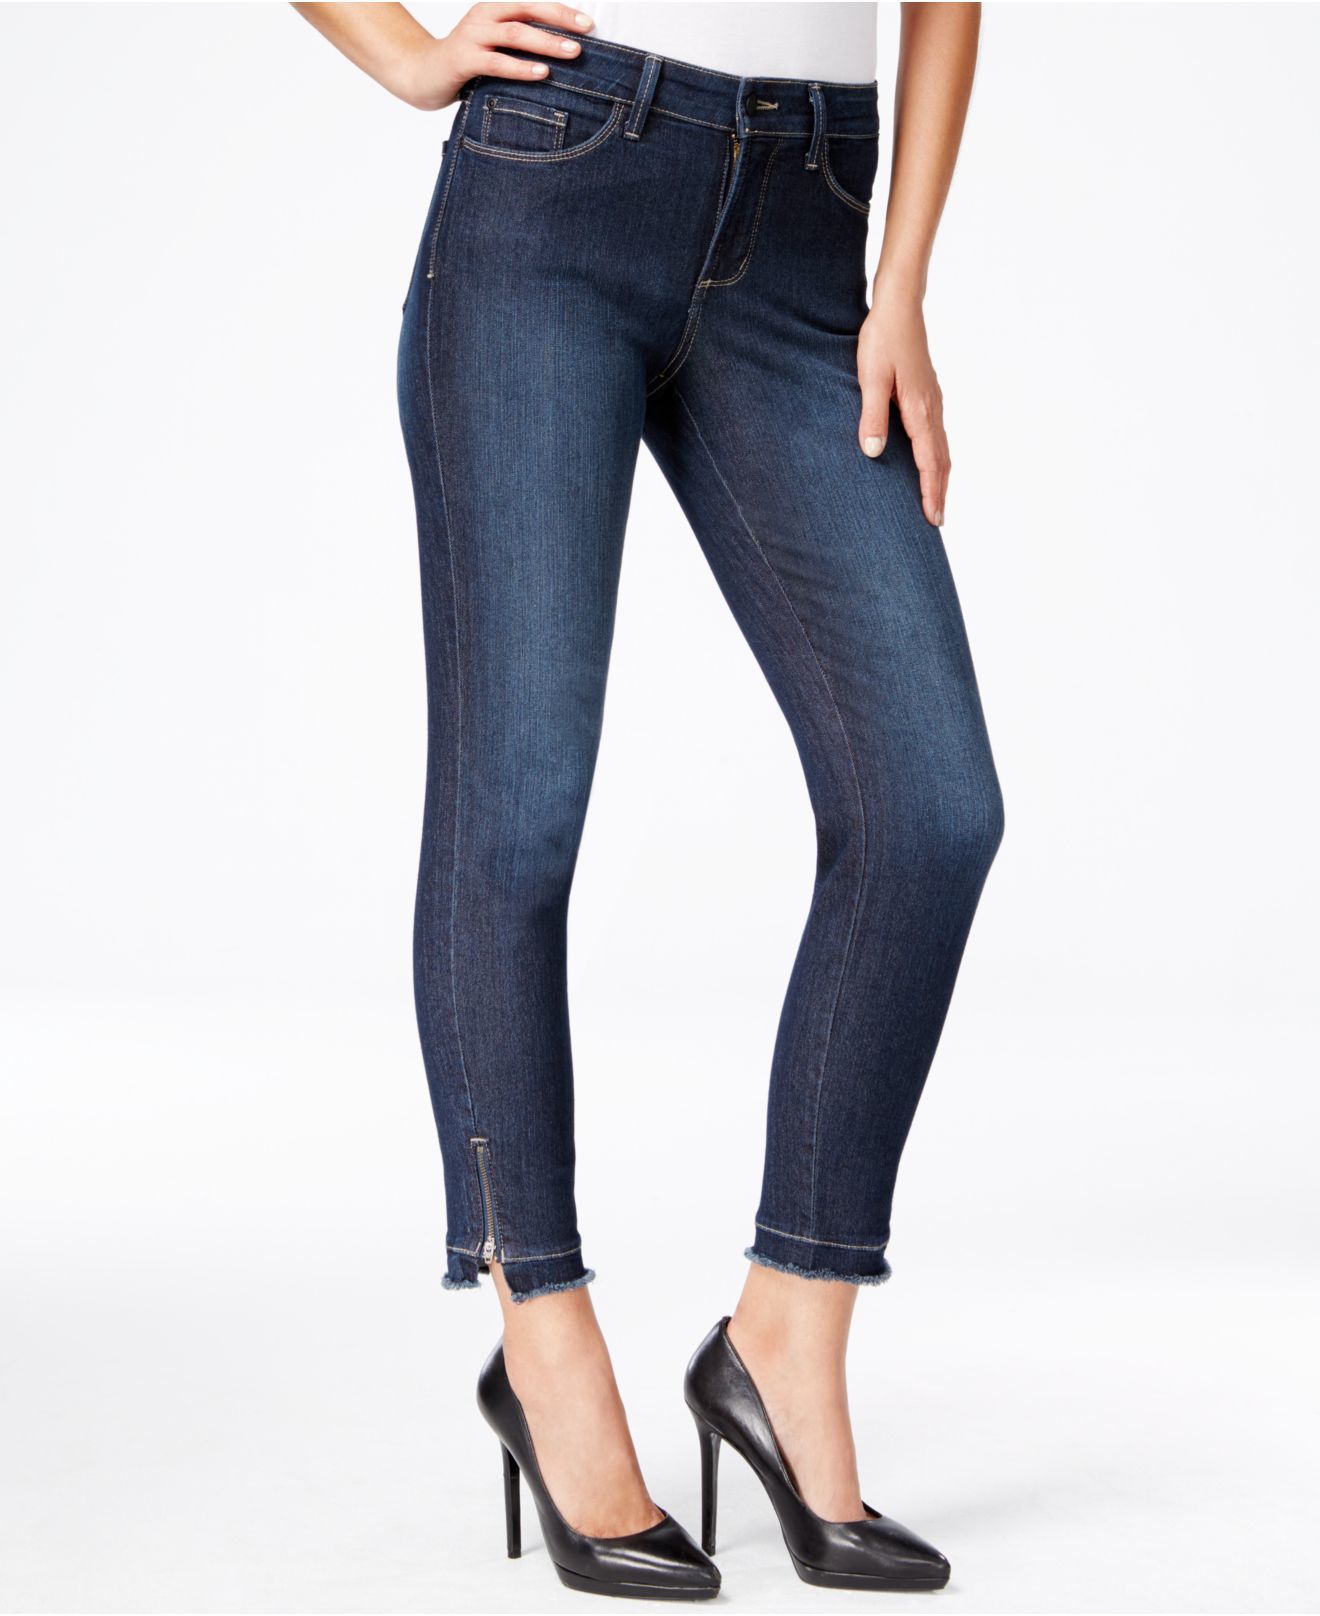 Lyst - Nydj Petite Ankle-zip Skinny Jeans in Blue